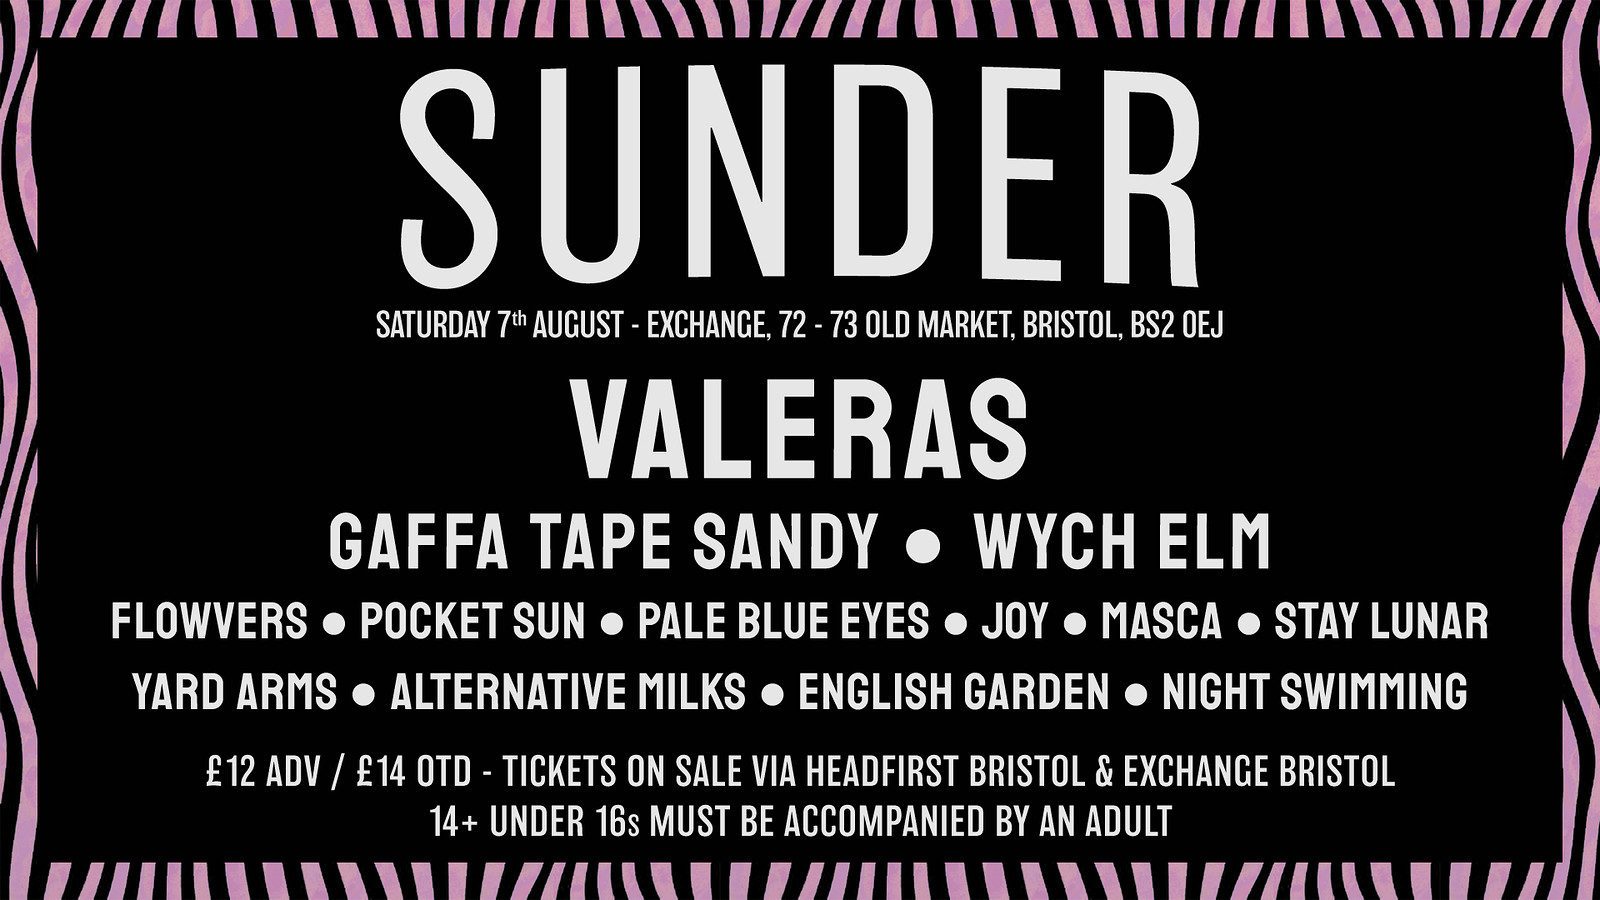 Sunder Festival 2021 at Exchange